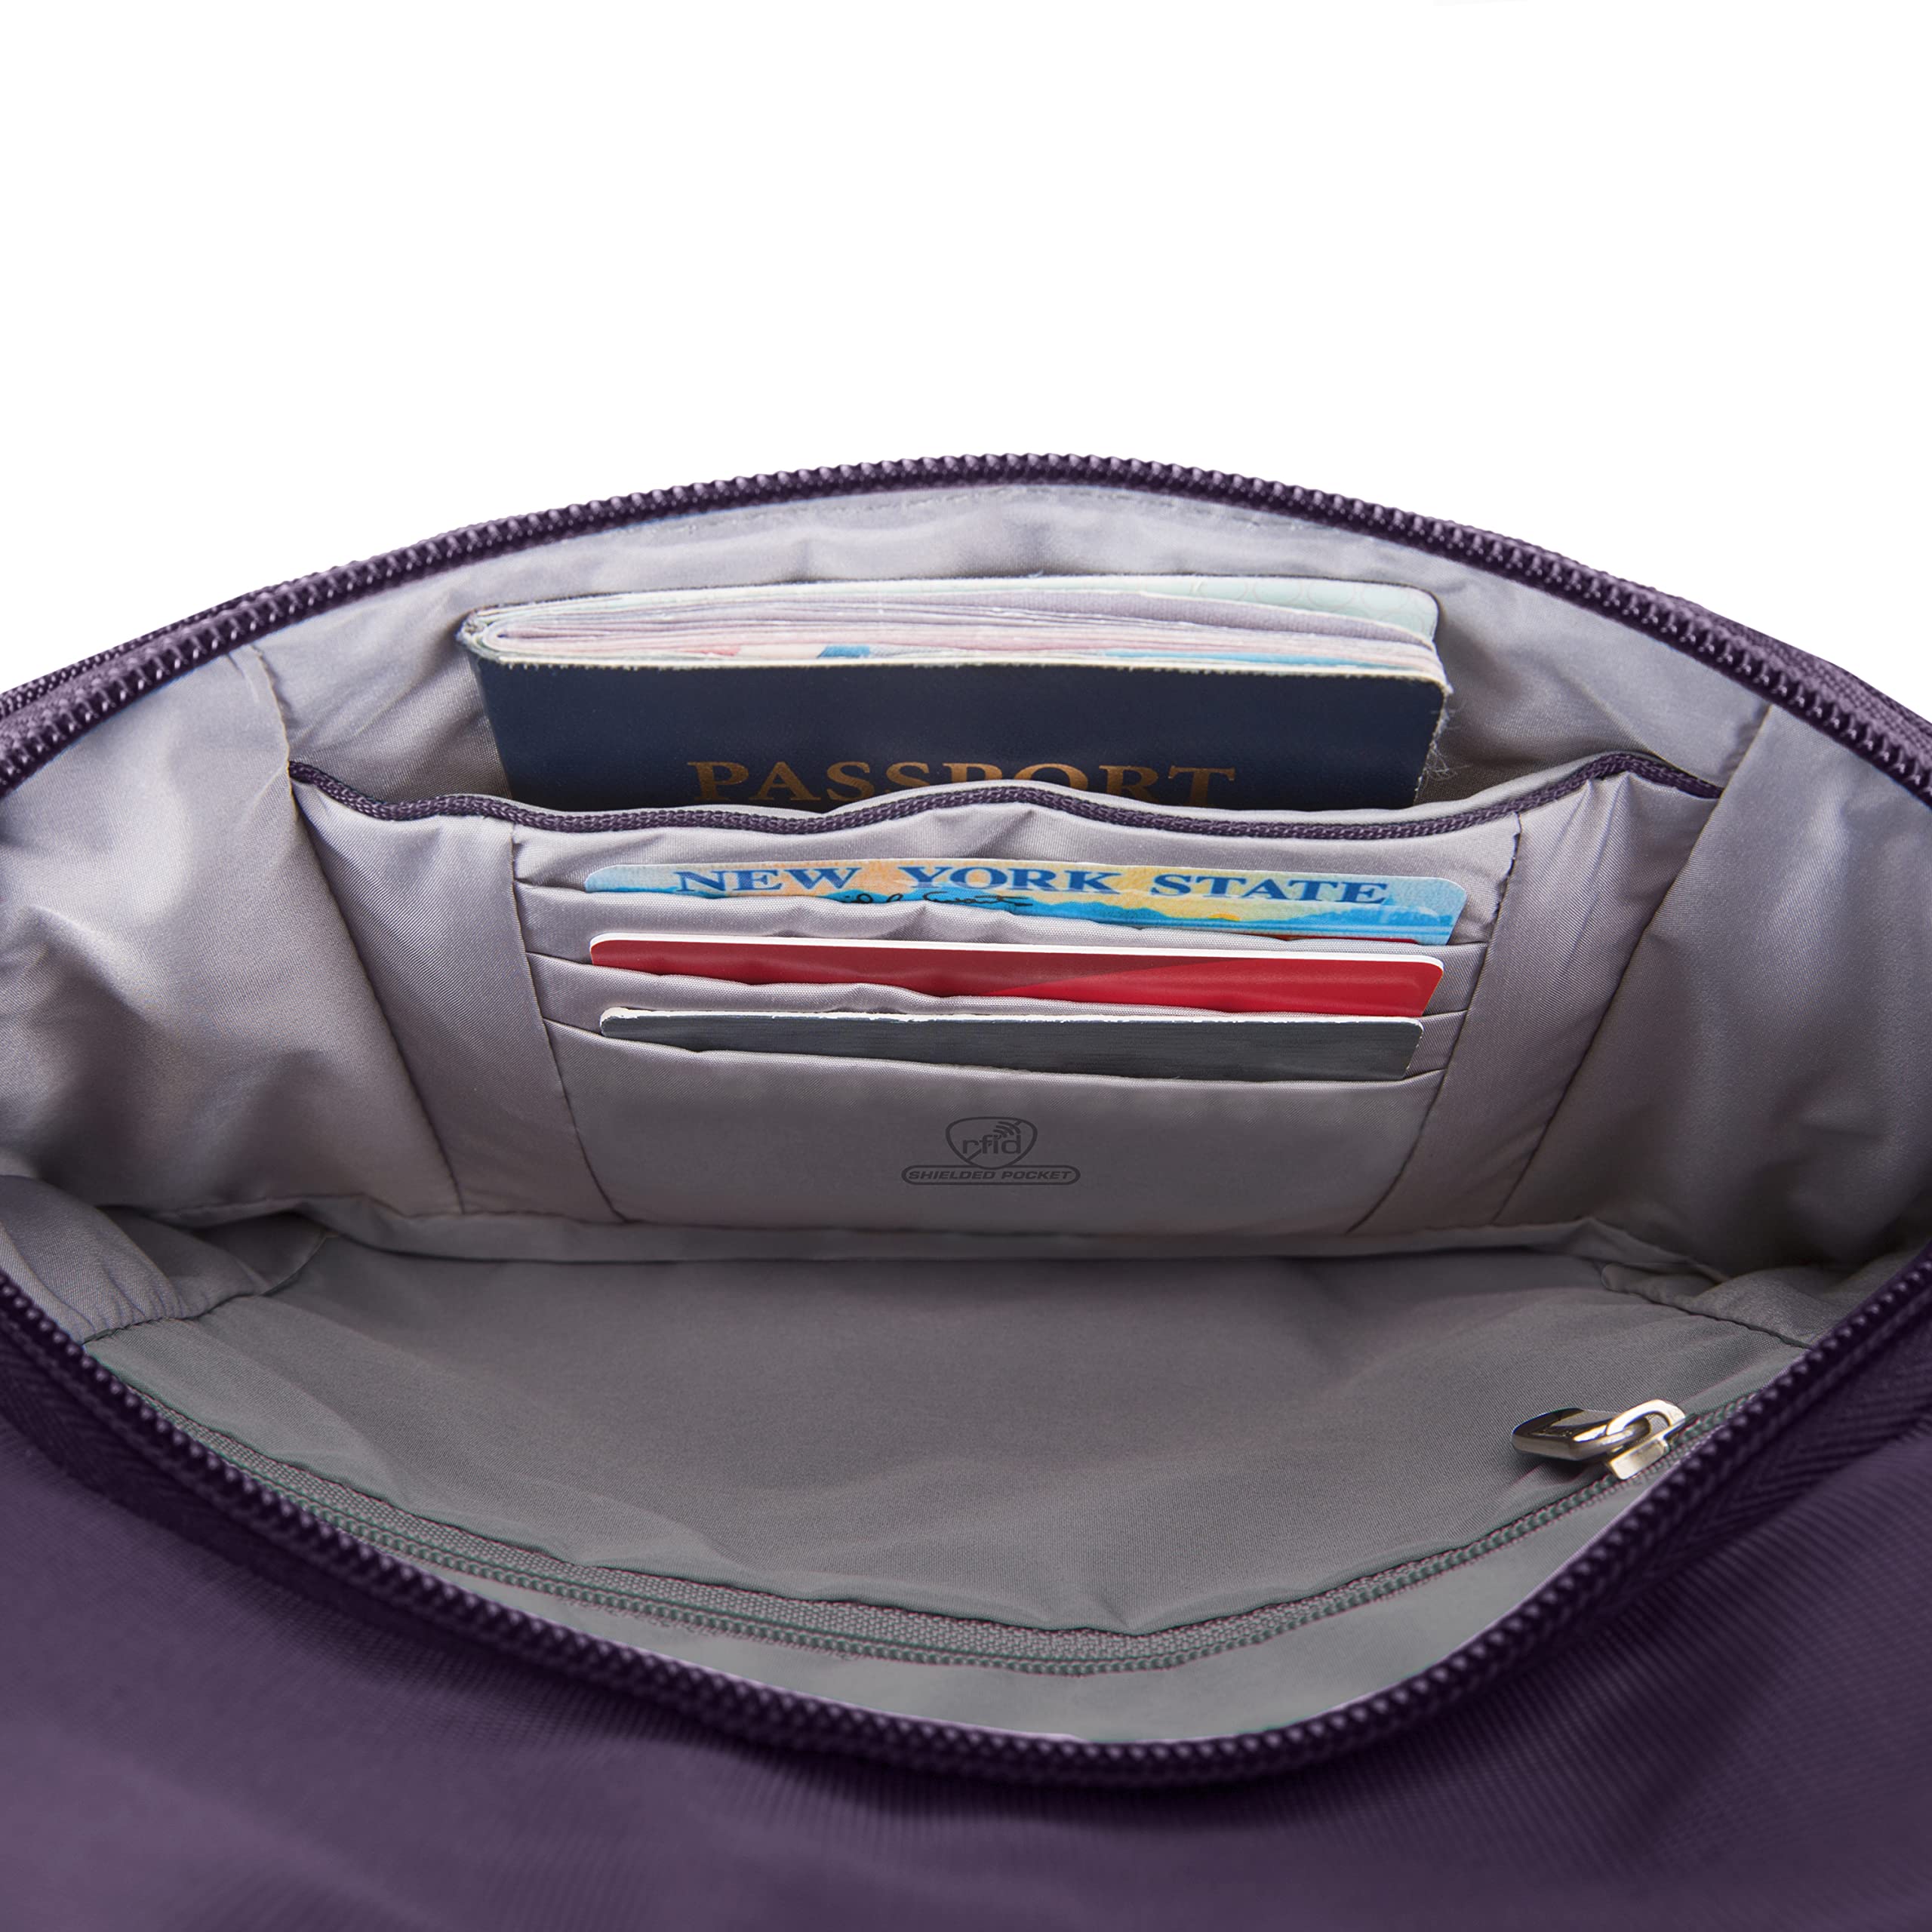 Travelon Anti-Theft Essential Messenger Bag (Purple)